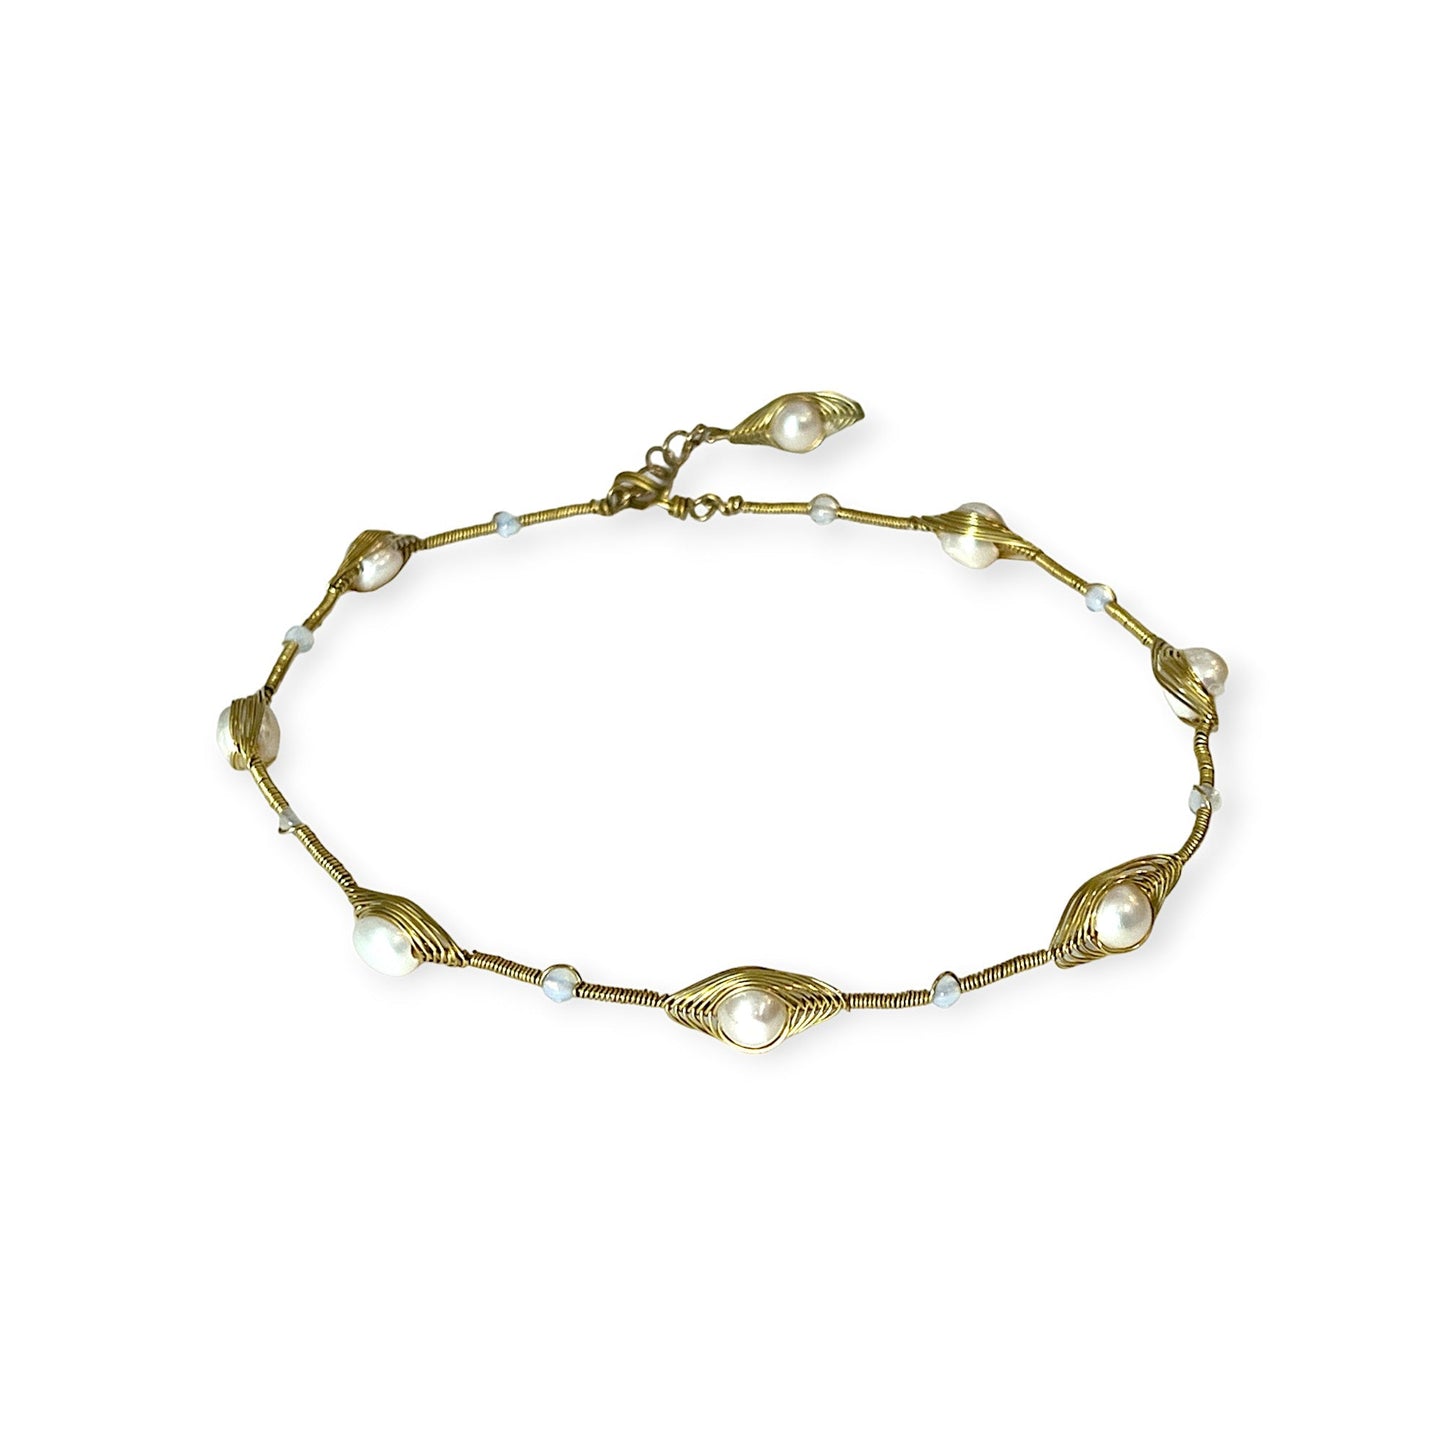 Beaded gemstone choker necklace - Sundara Joon